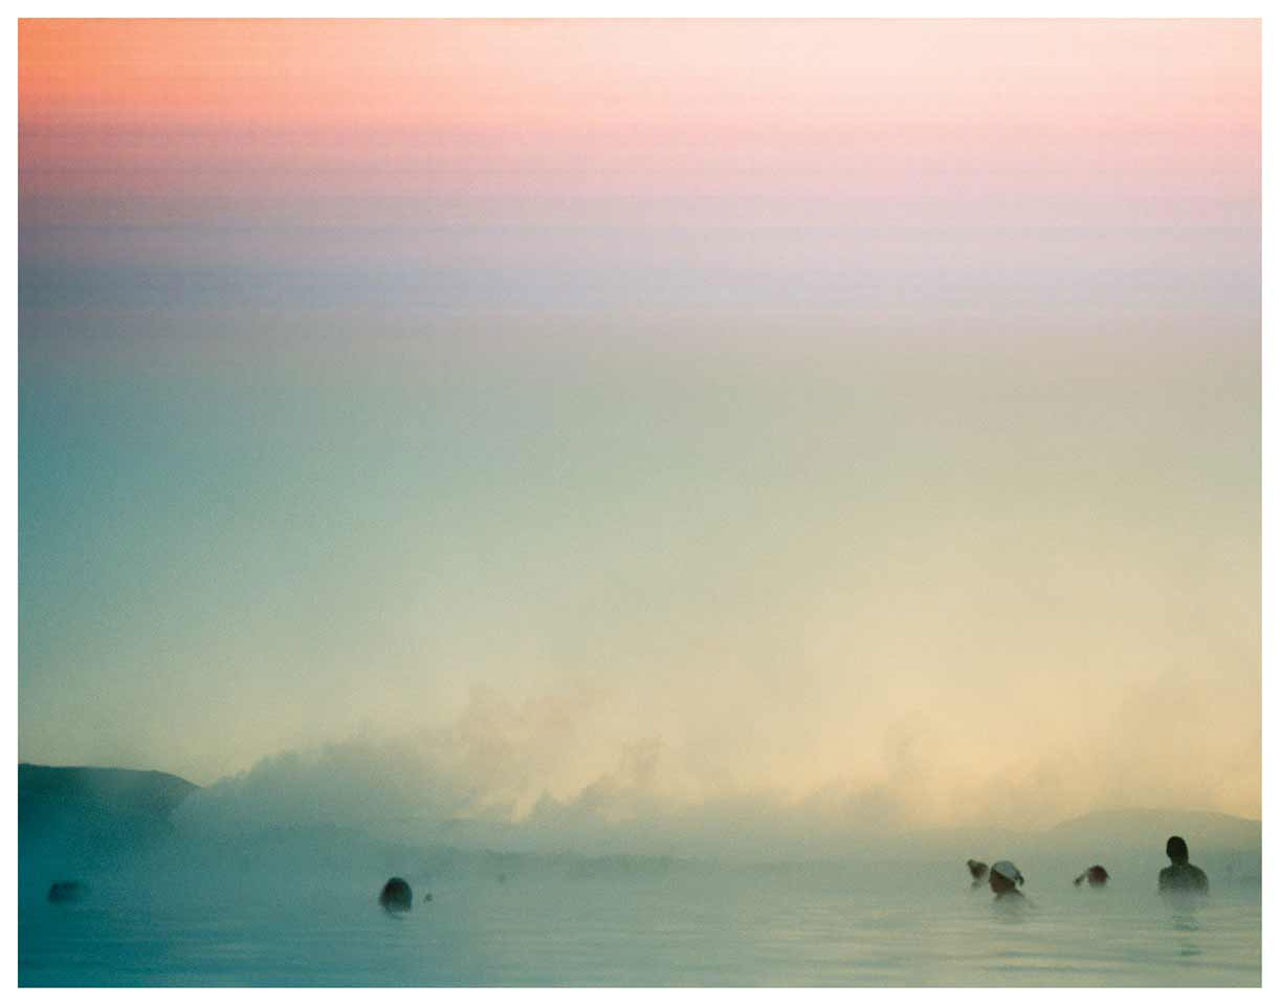 Sara Naim, 'Landscape 1, Sunrise', 2010, C-type Digital Print, 71.12 x 48.26 cm. Image courtesy the artist and The Third Line.